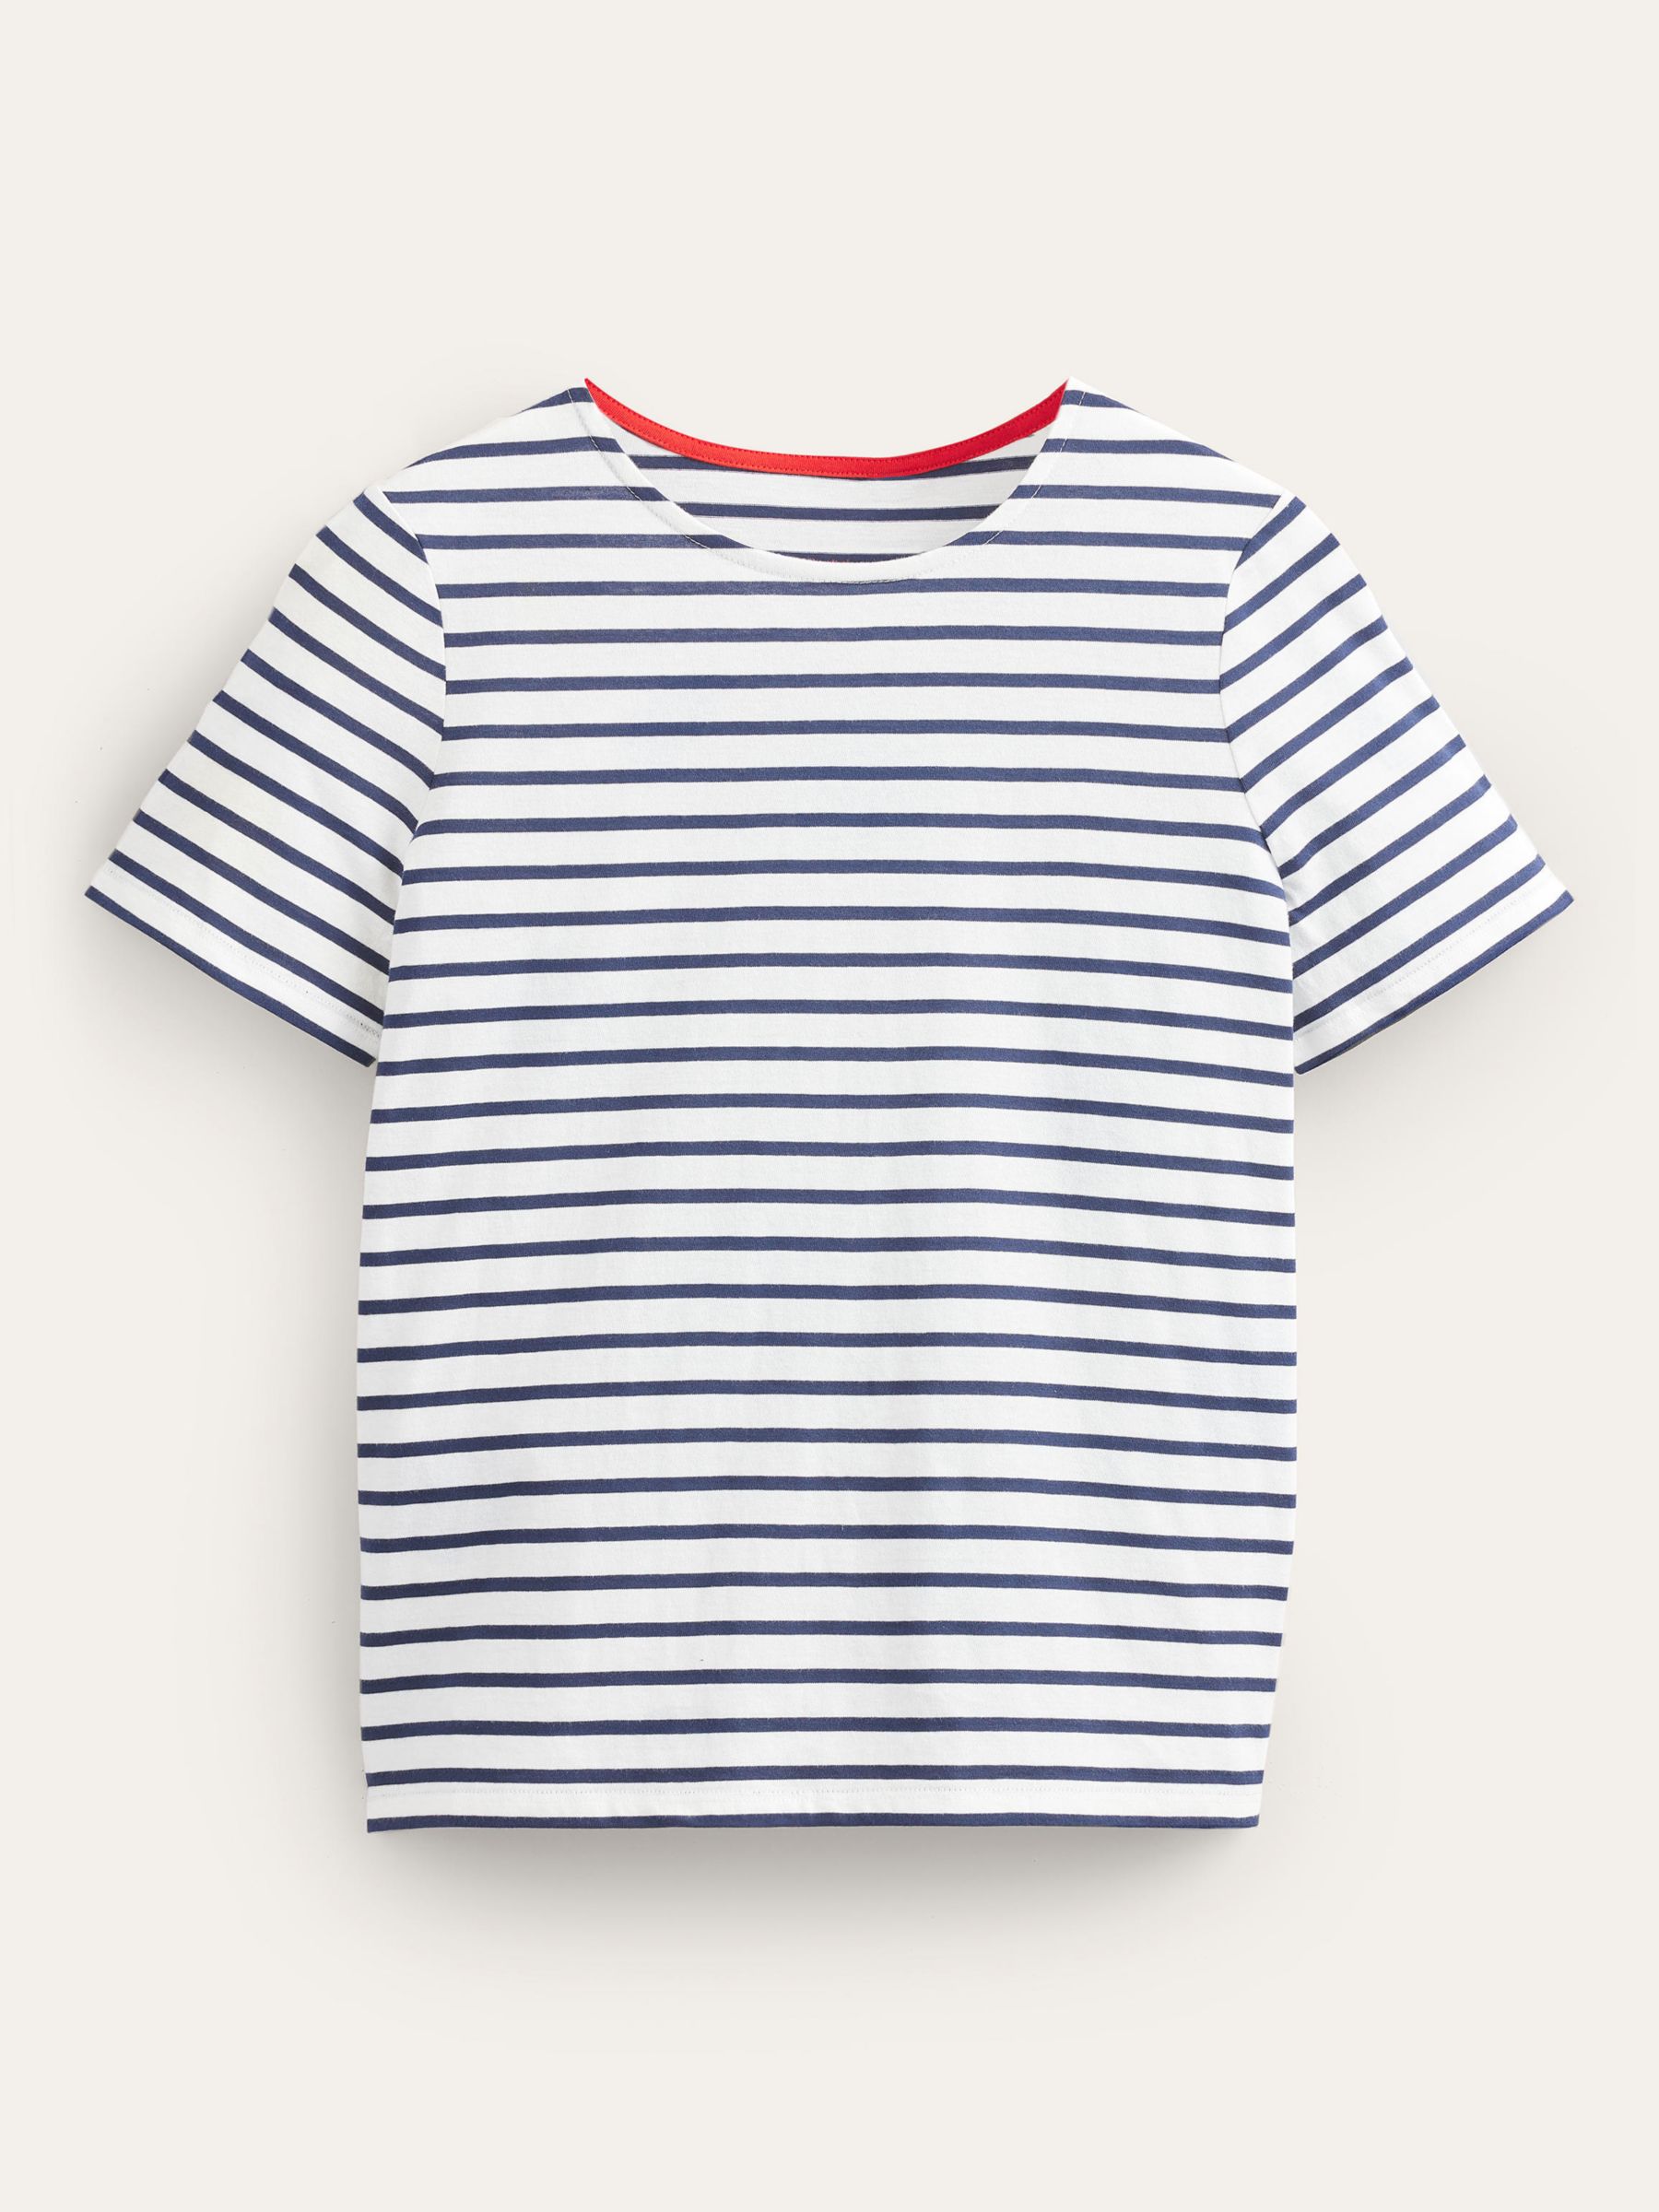 Boden Breton Stripe T-Shirt, Ivory/Navy at John Lewis & Partners